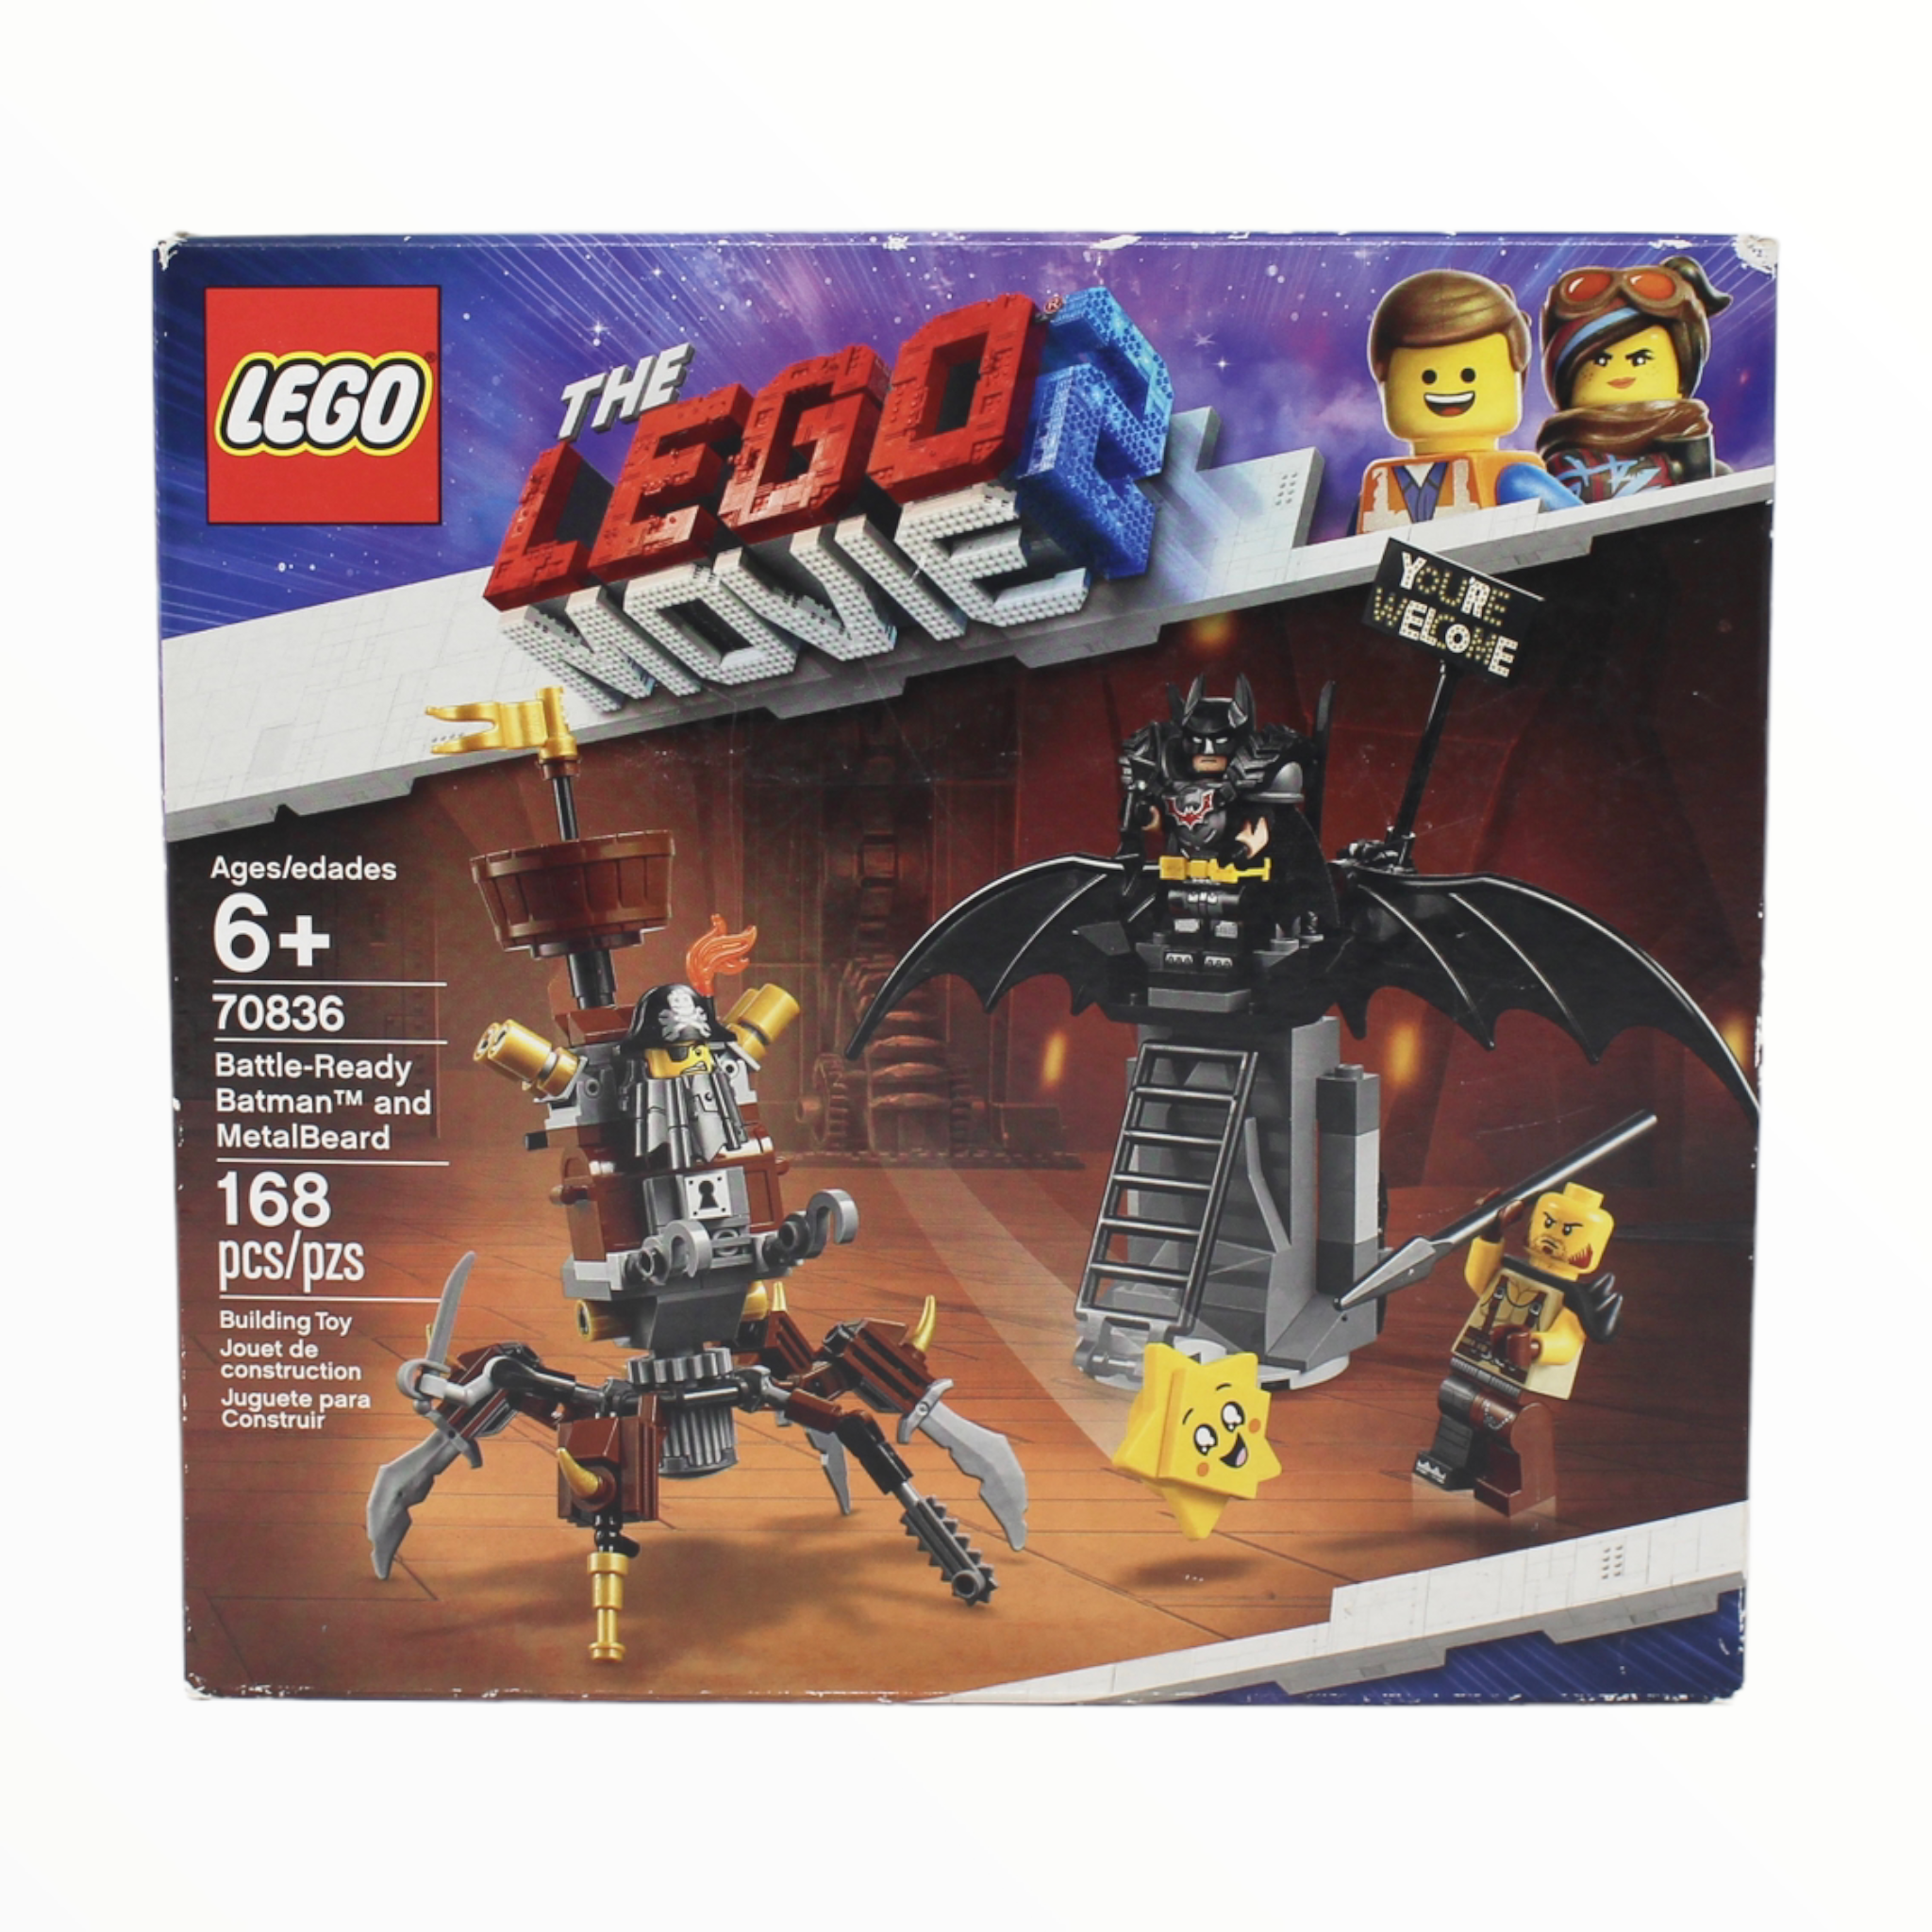 Retired Set 70836 LEGO Movie 2 Battle-Ready Batman and MetalBeard